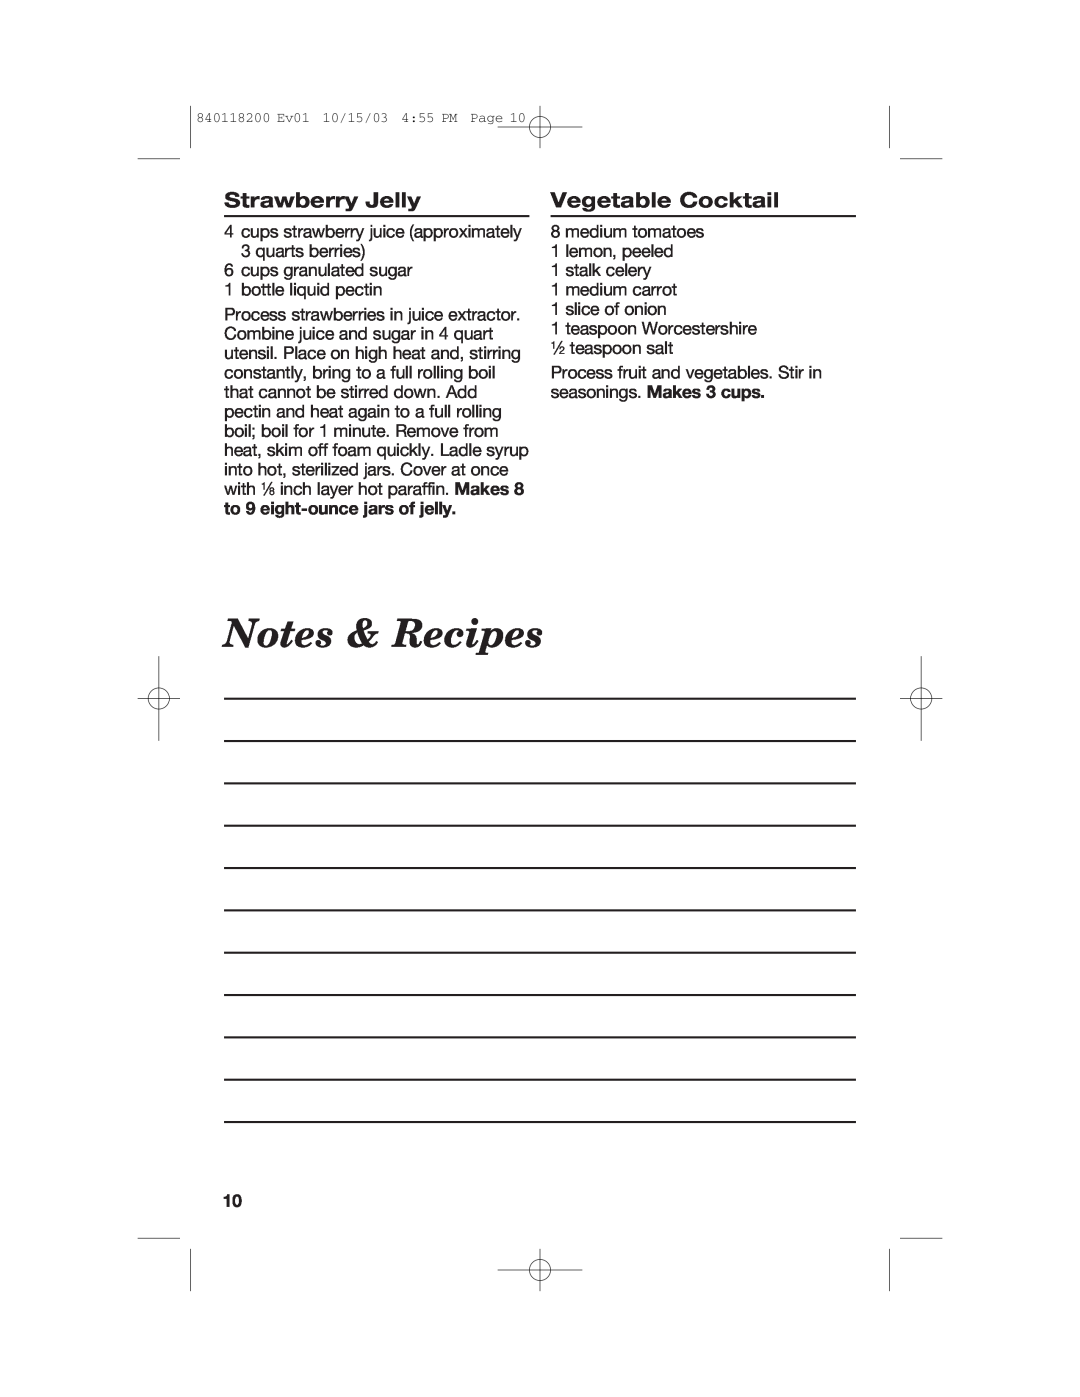 Hamilton Beach 67900 manual Notes & Recipes, Strawberry Jelly, Vegetable Cocktail 